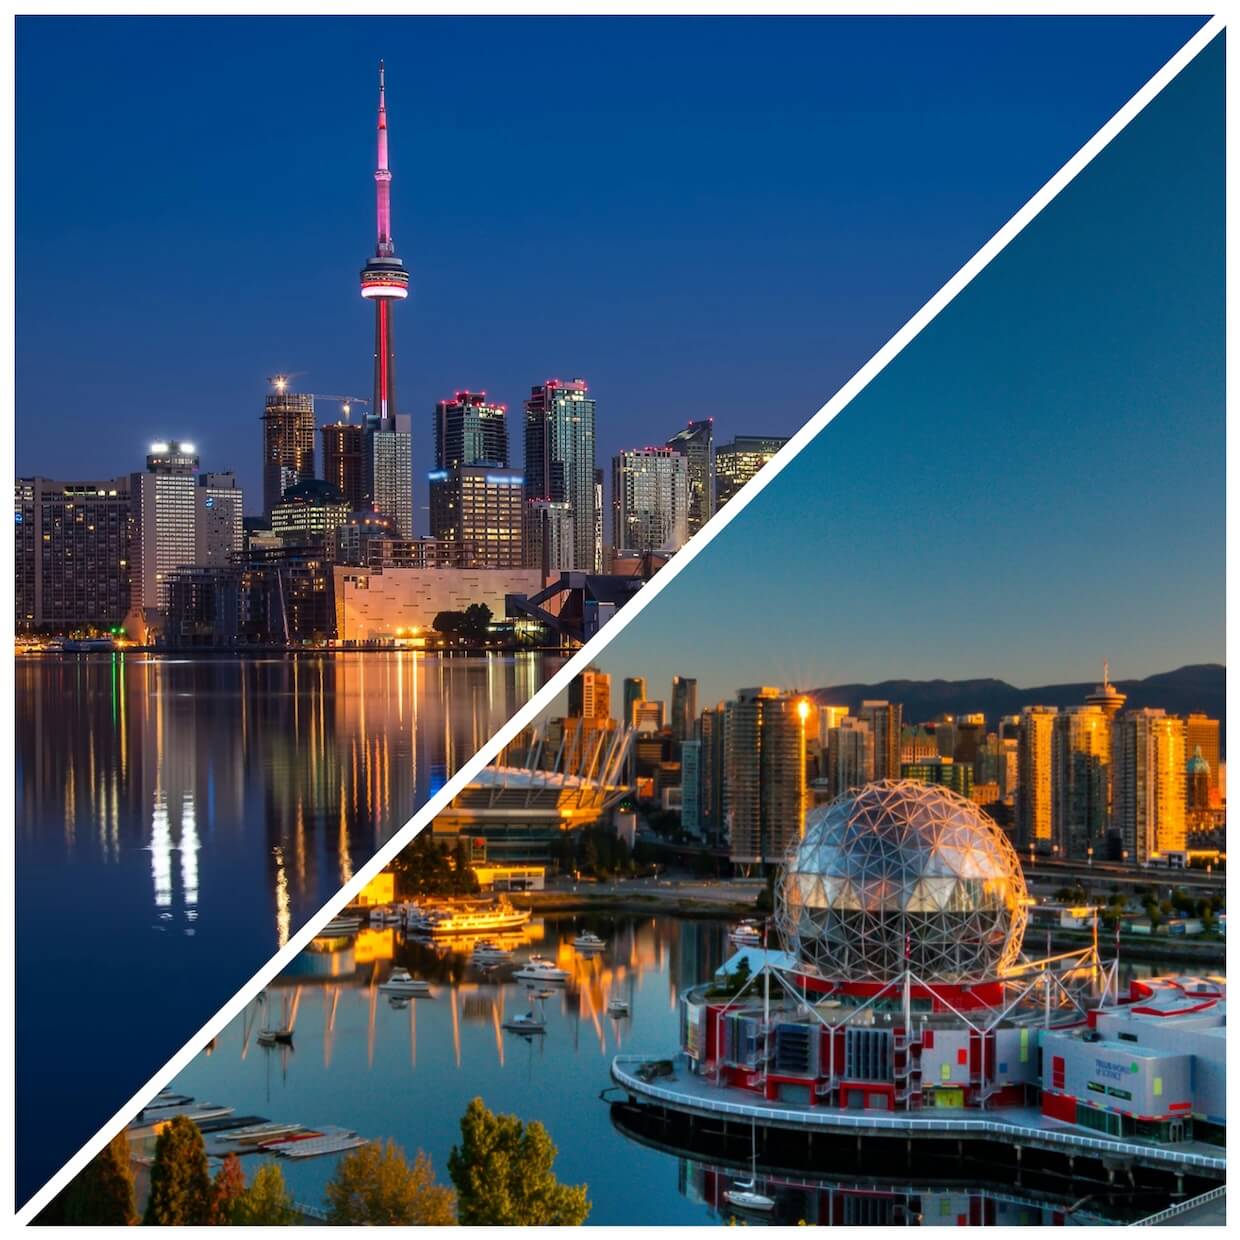 split image of Toronto skyline and Vancouver skyline